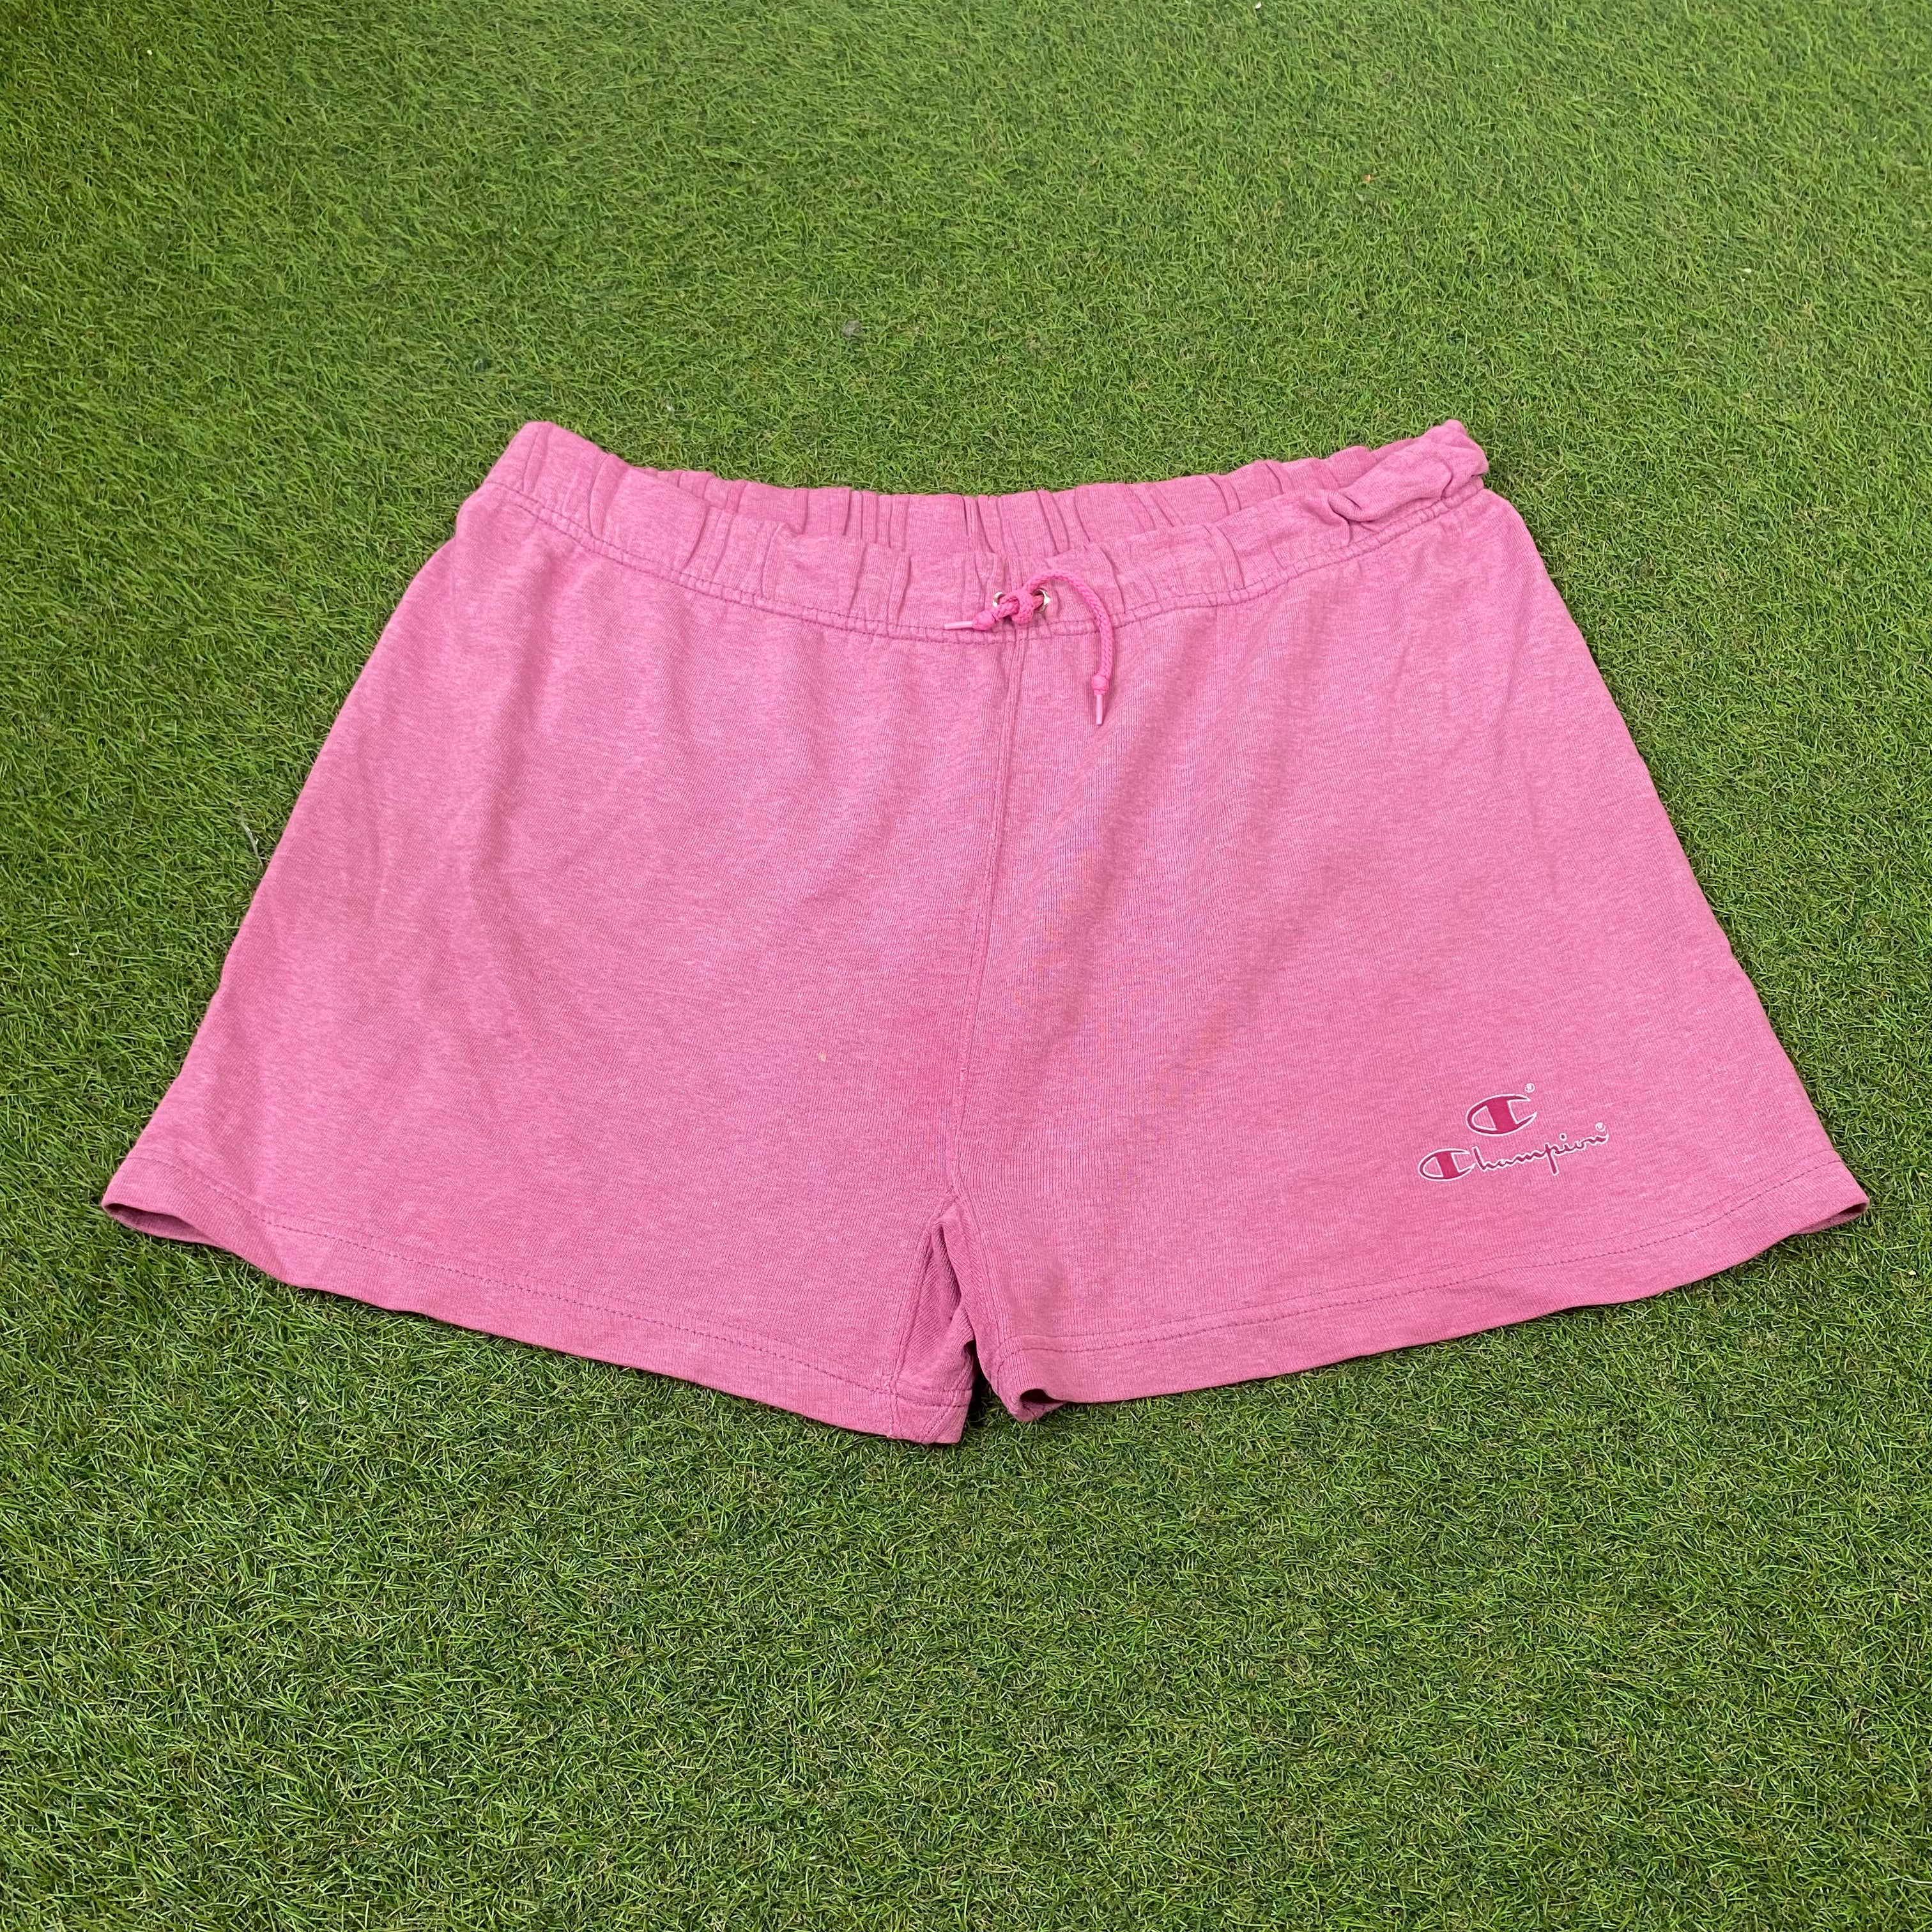 Retro 90s Champion Cotton Shorts Pink XL